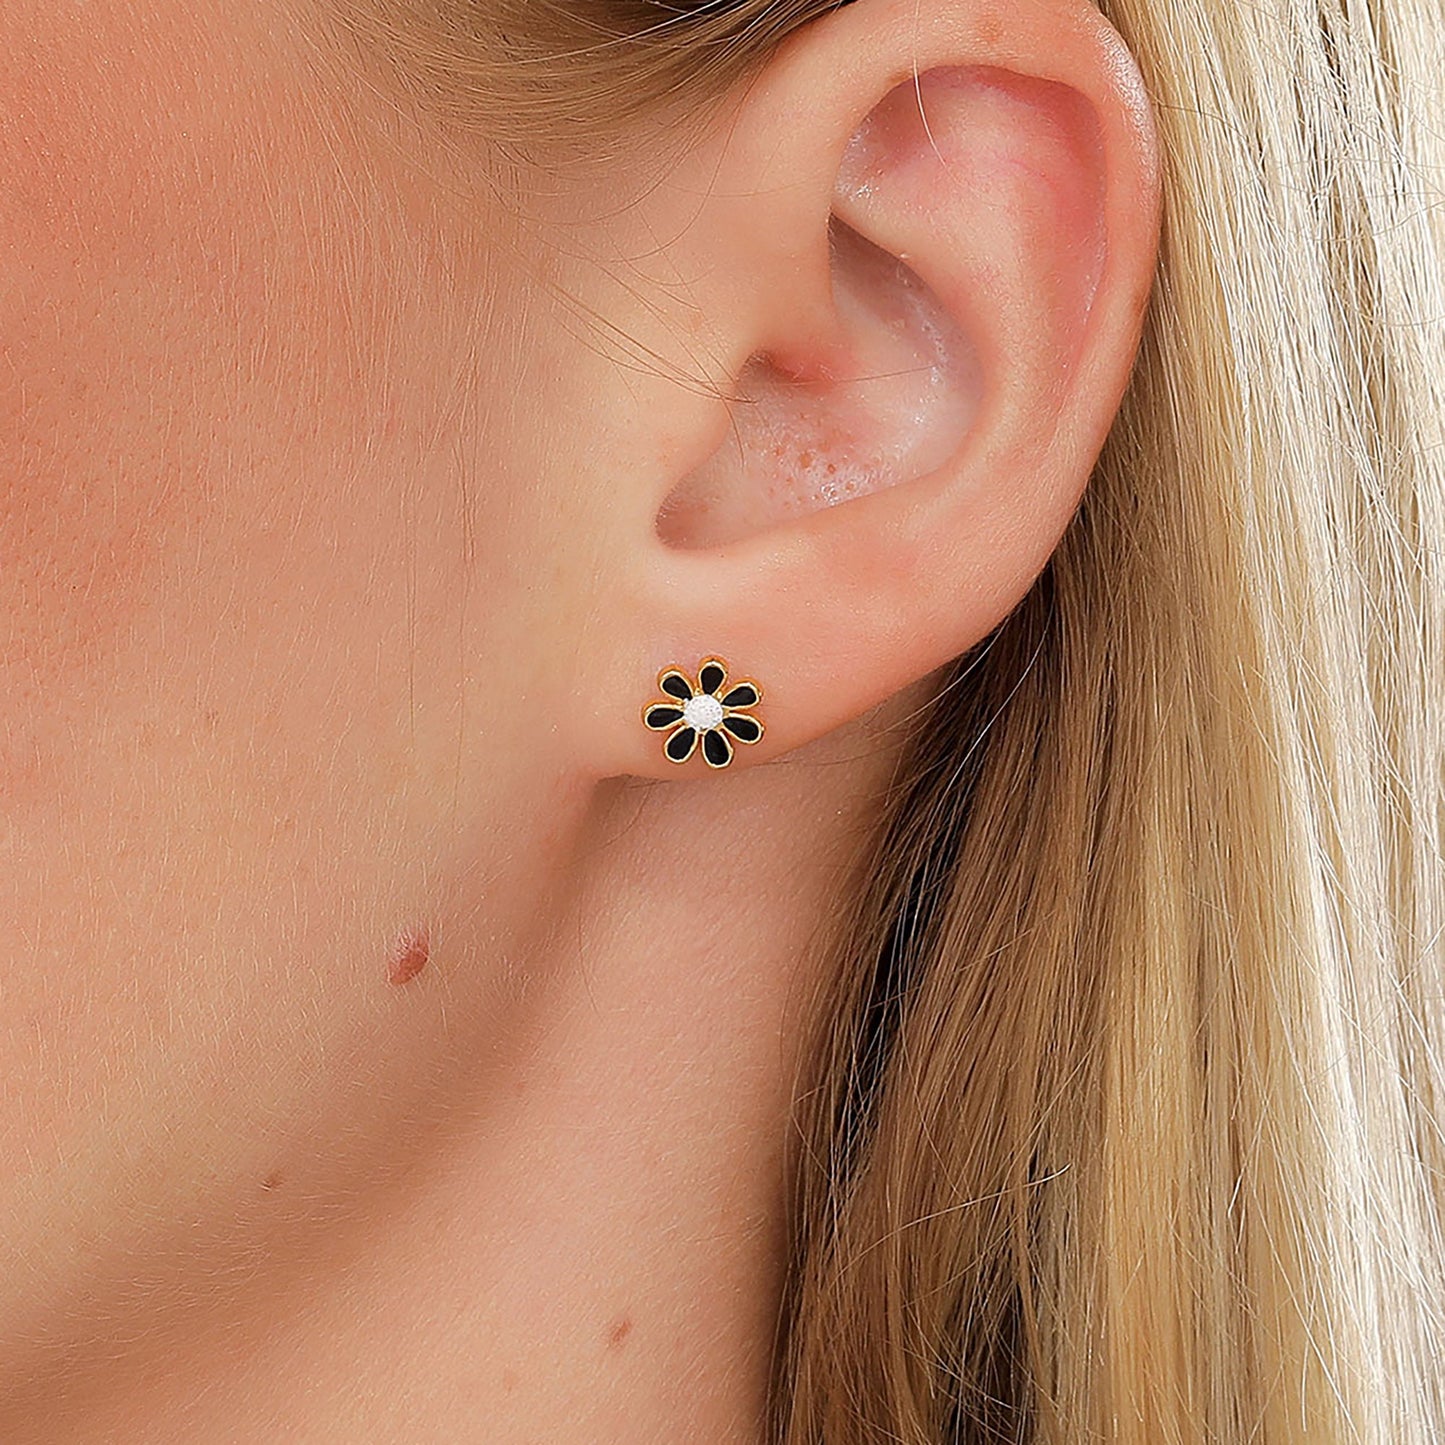 Titanium Black Flower Stud Earrings, Non Tarnish Earrings, Implant Grade Titanium Waterproof Earrings, Minimal Earrings